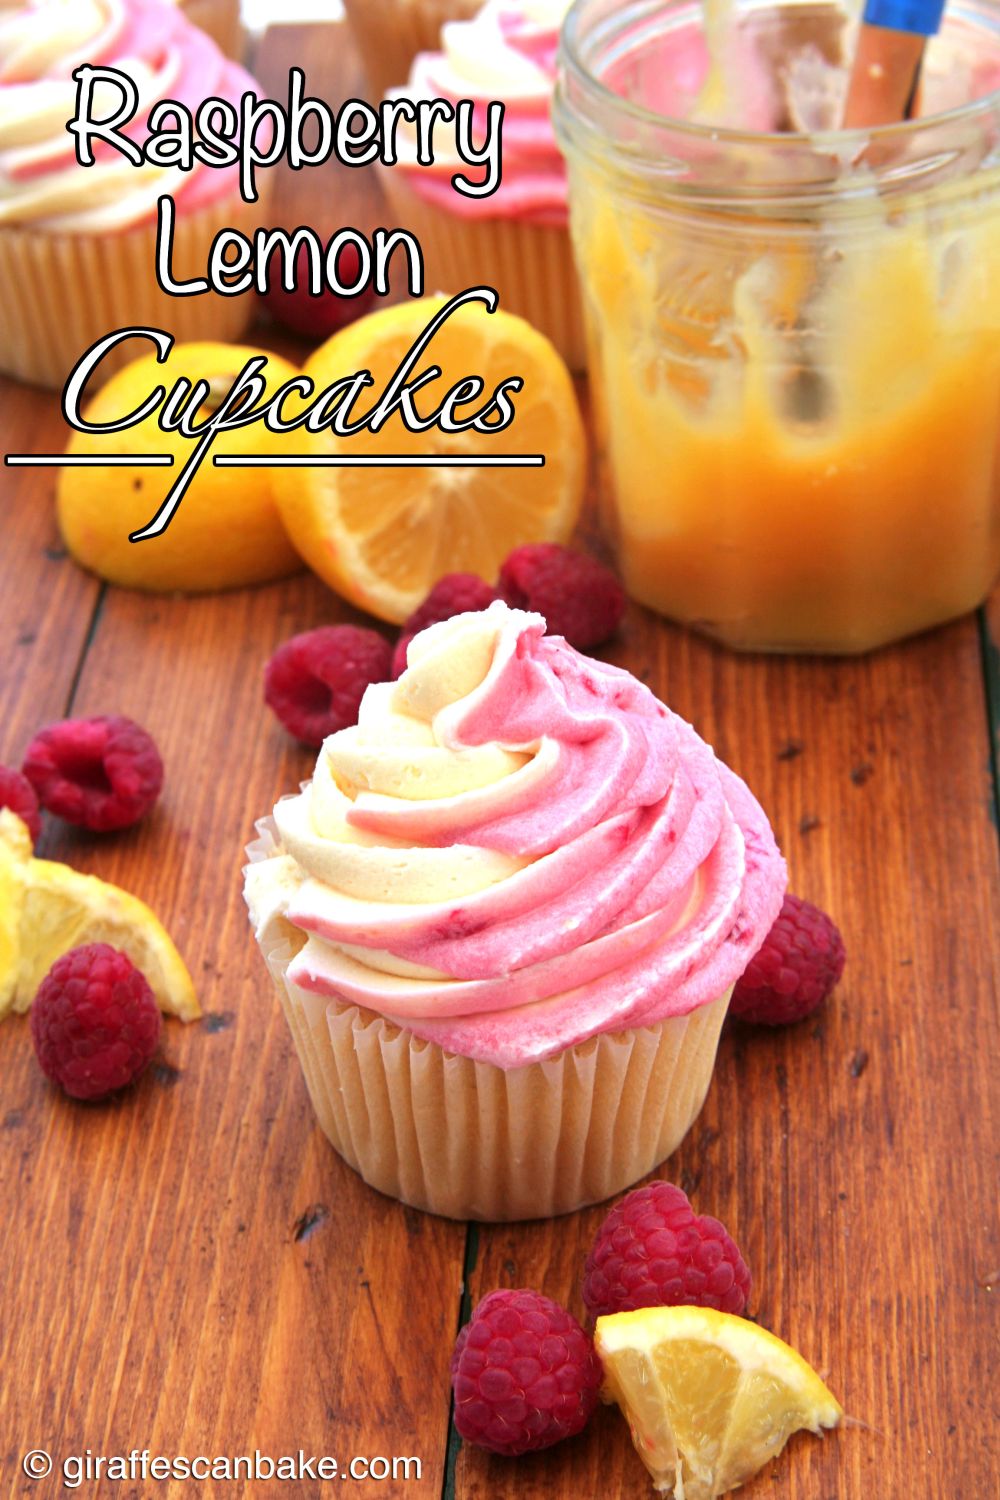 Raspberry lemon cupcakes